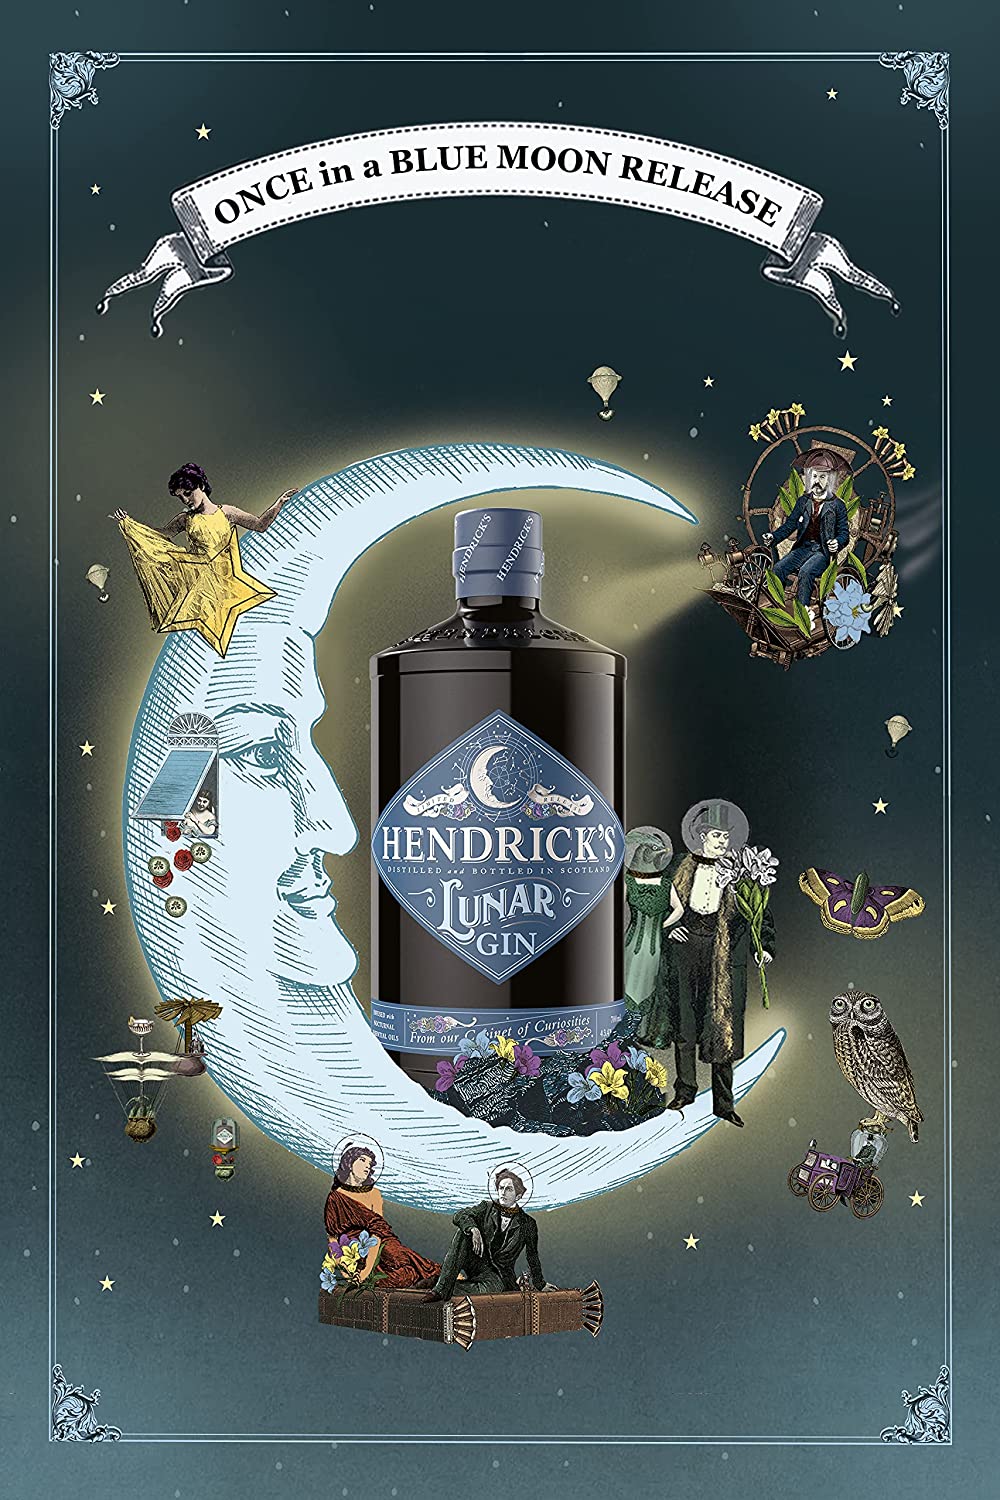 Hendricks Gin Lunar 43,4% vol. 0,7L